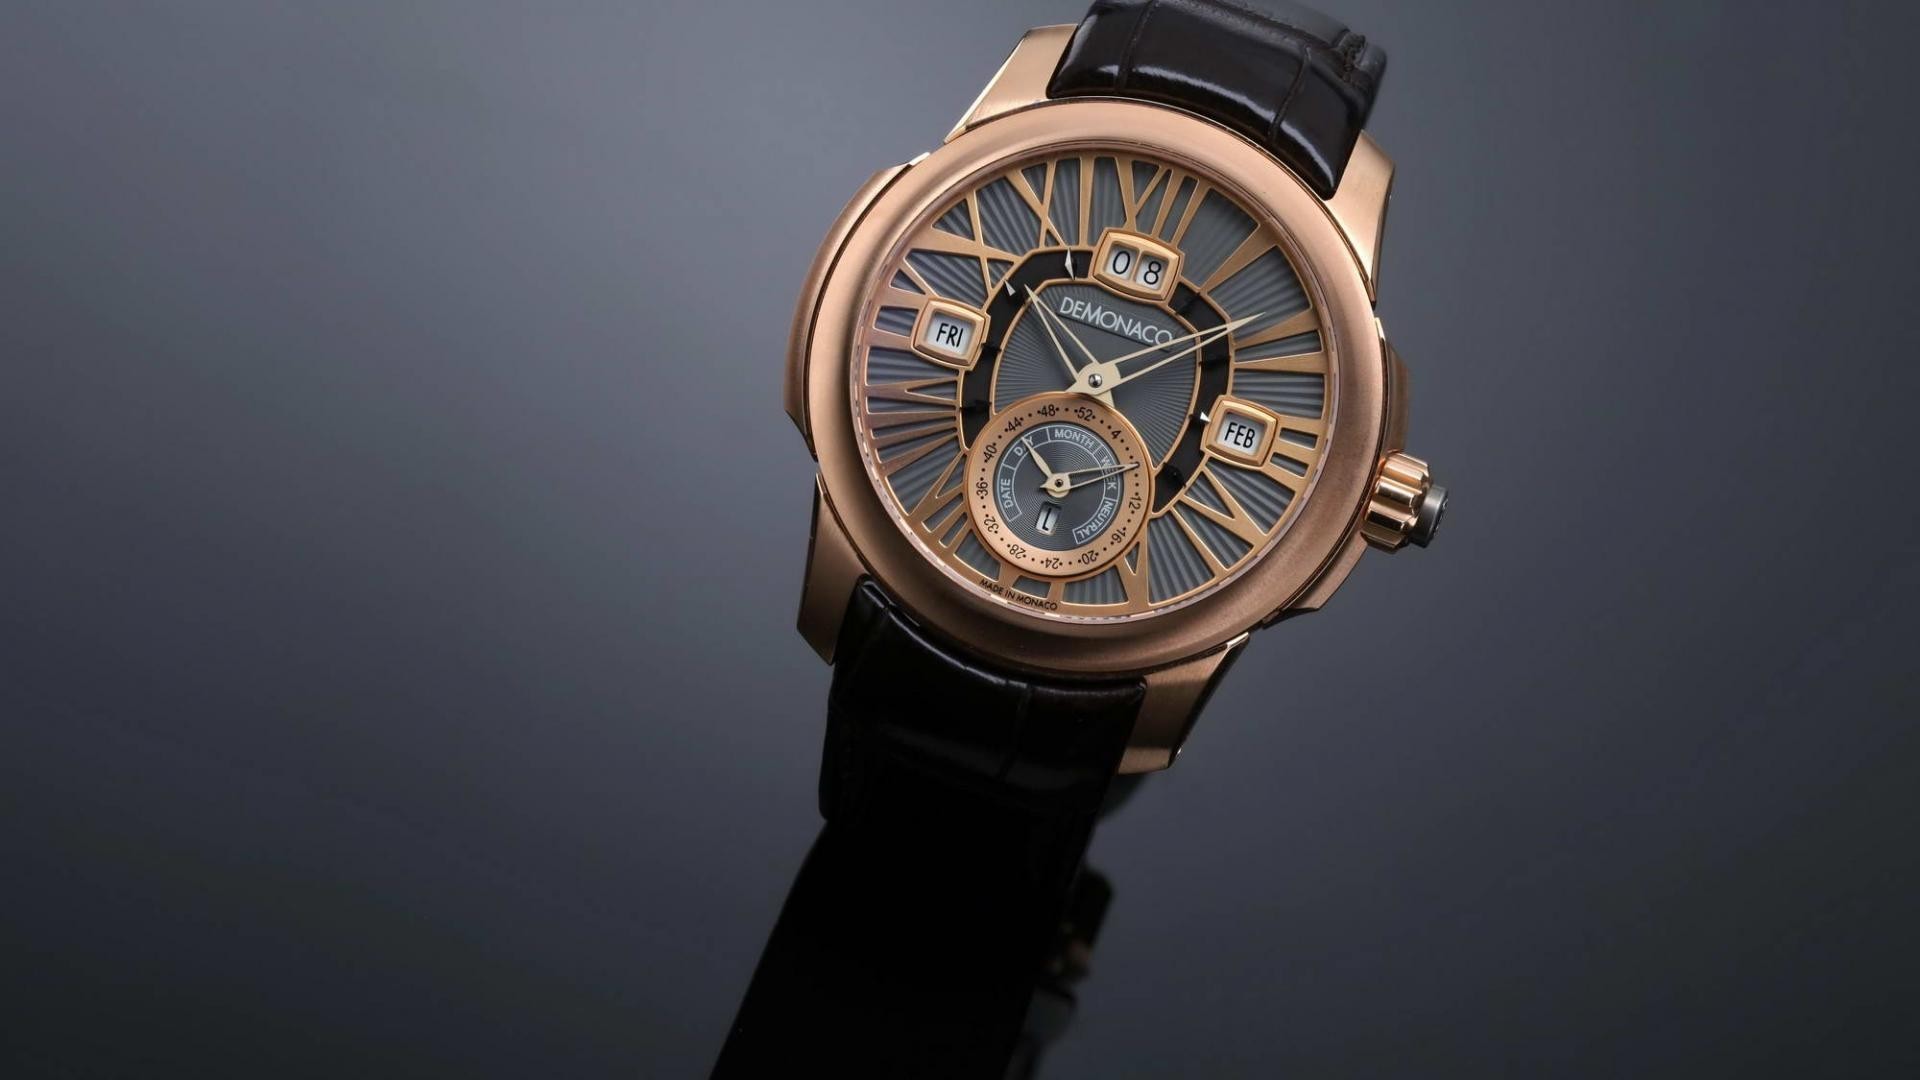 General 1920x1080 watch luxury watches leather minimalism wristwatch simple background DEMONACO technology